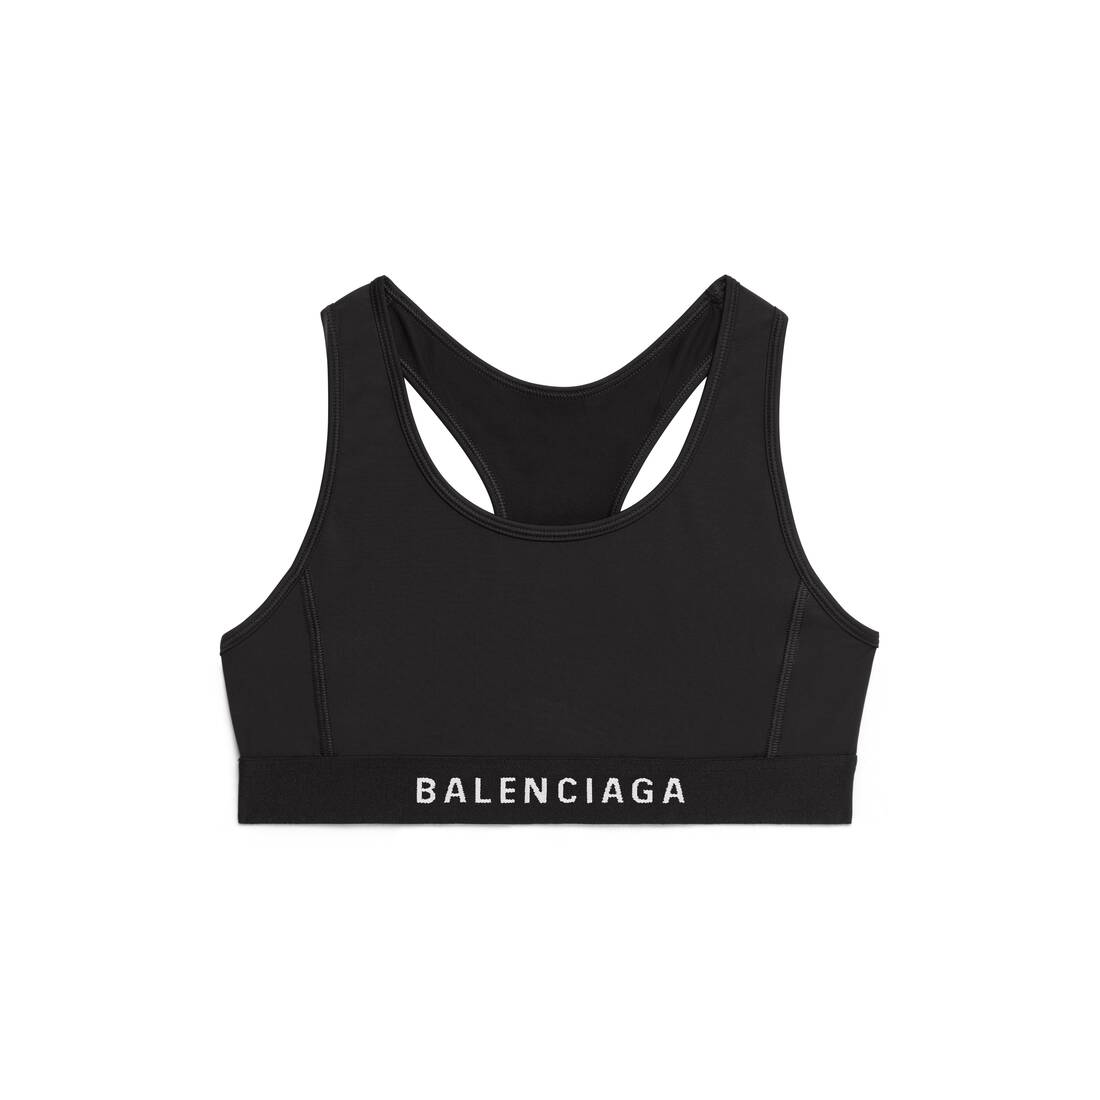 Sports bra top by Adidas X Balenciaga